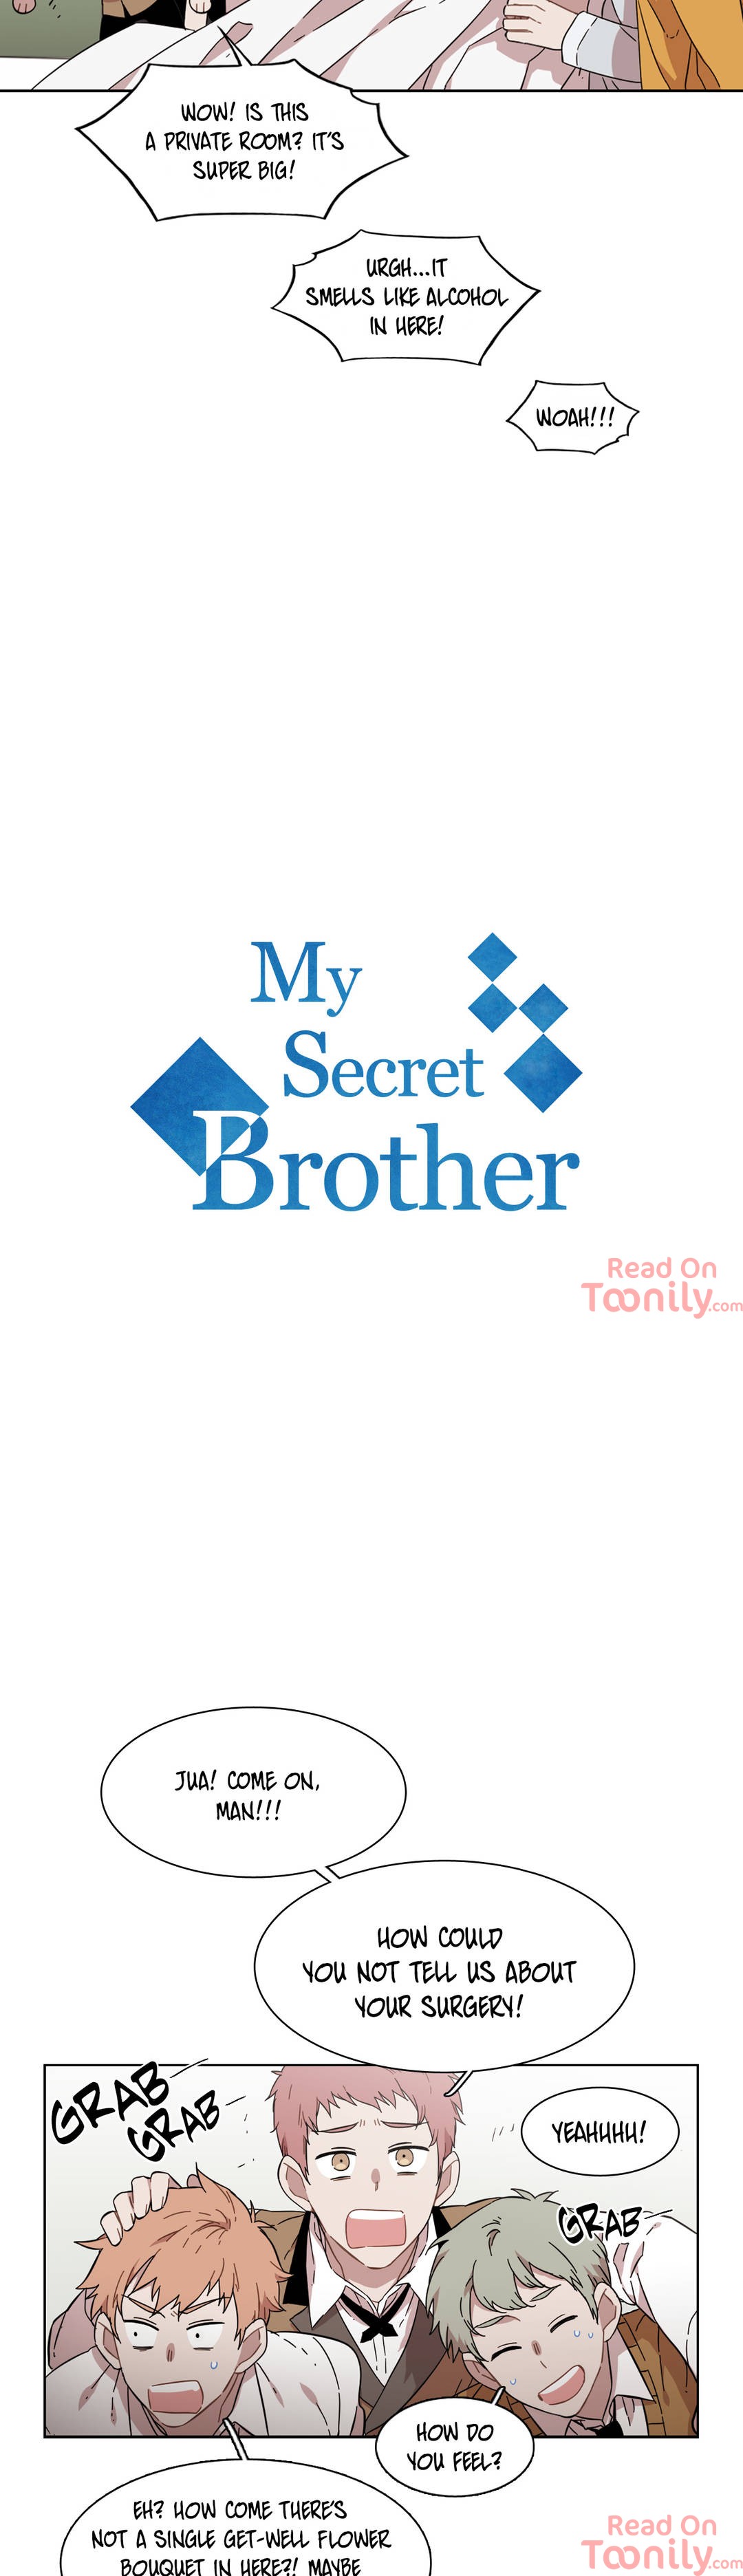 My Secret Brother image